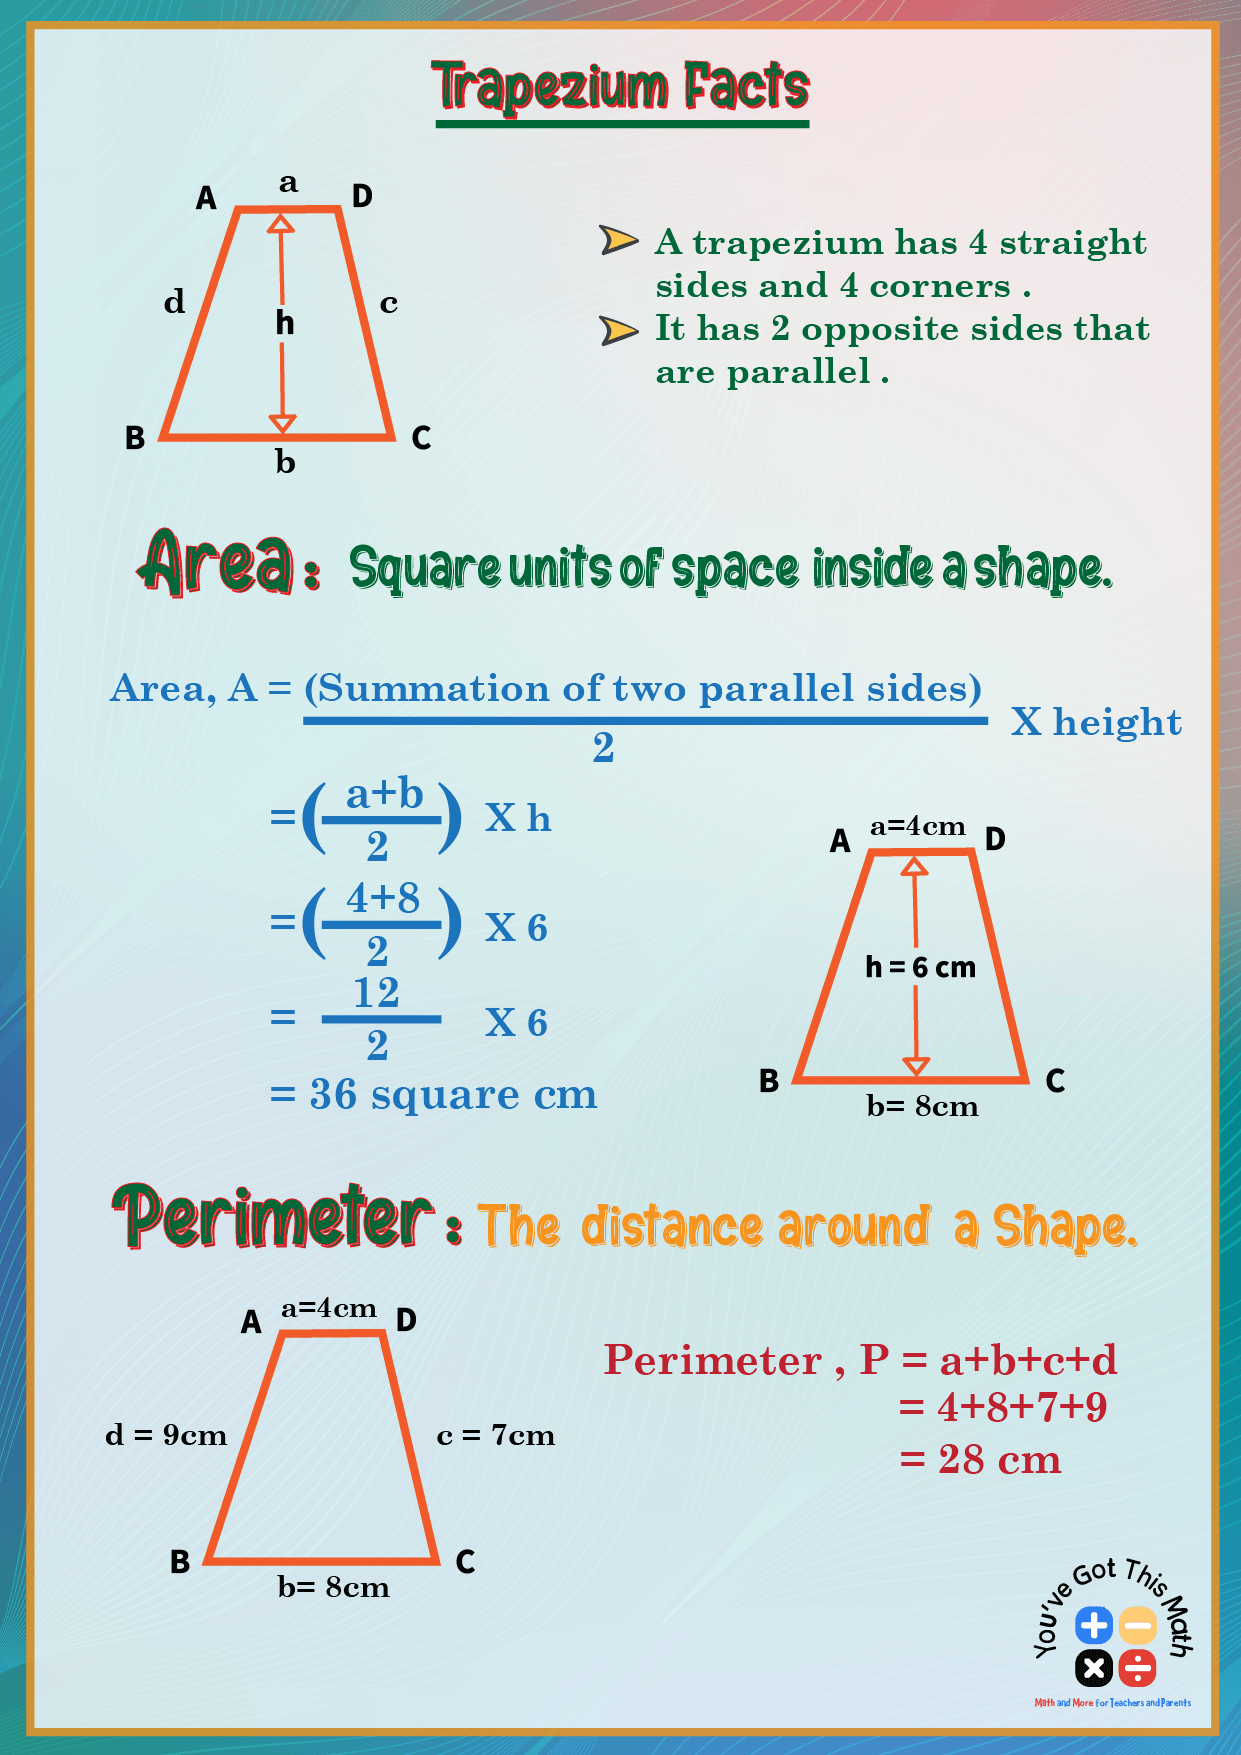 Explaining How to Find Area and Perimeter of Trapezium